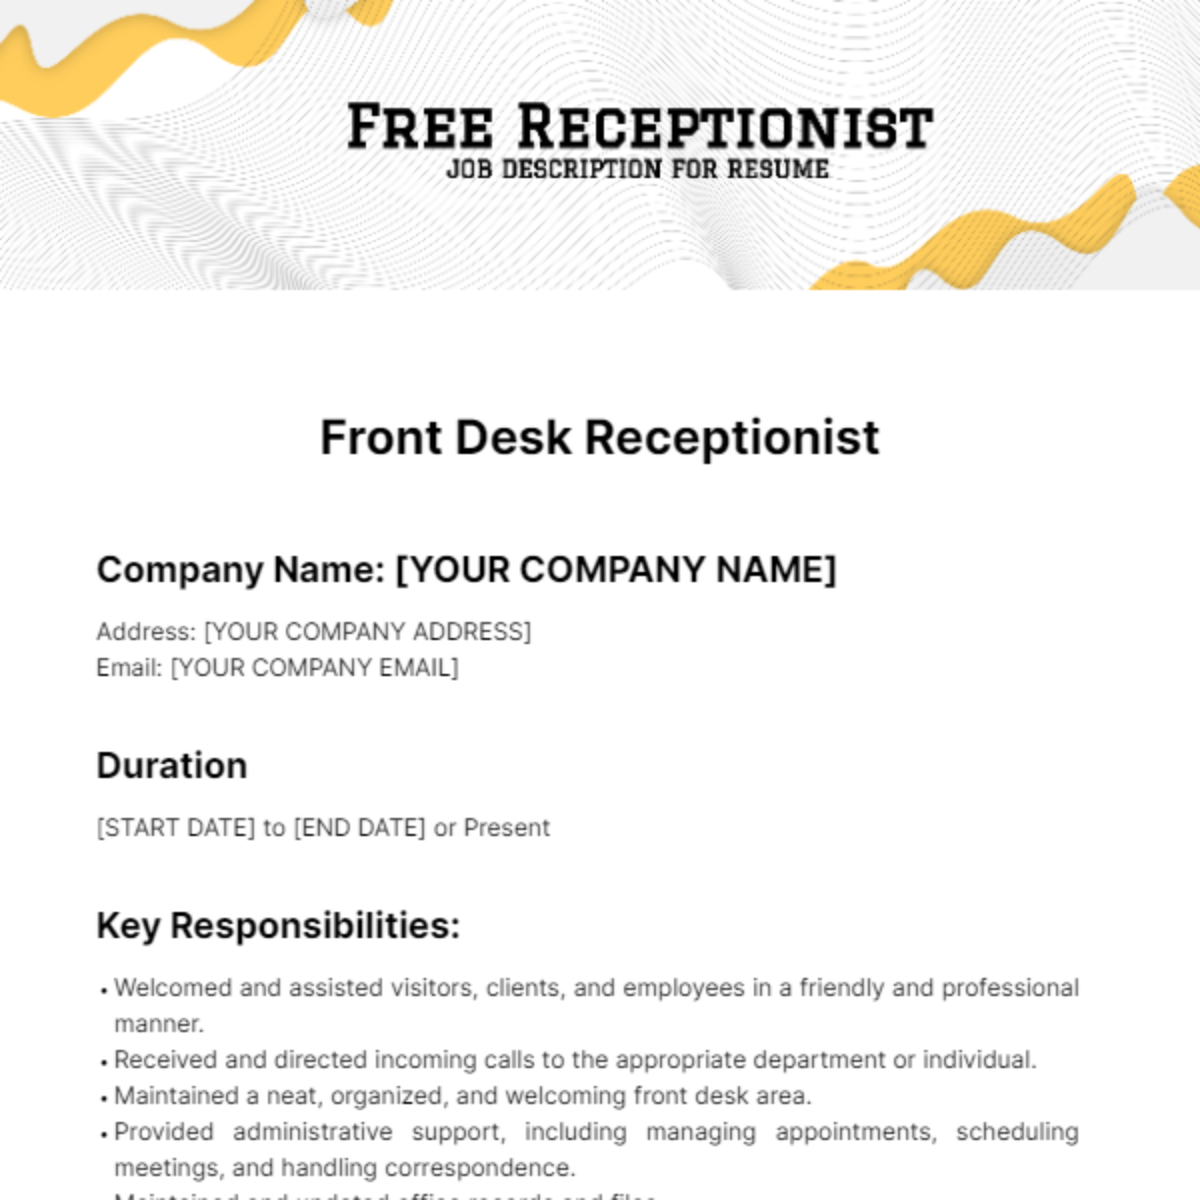 Free Receptionist Job Description for Resume Template